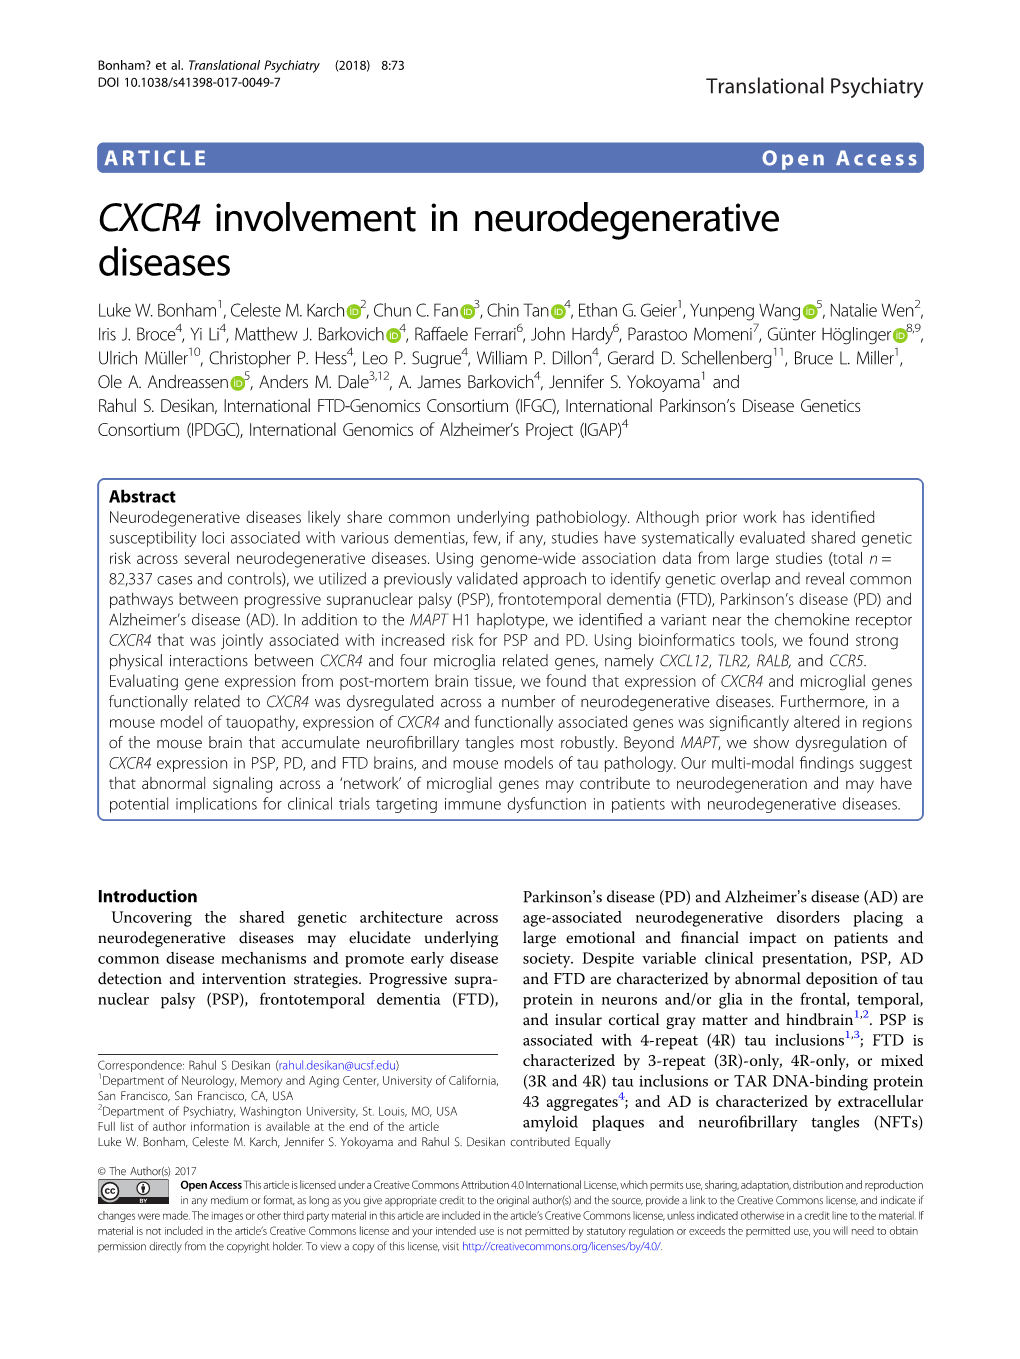 CXCR4 Involvement in Neurodegenerative Diseases Luke W